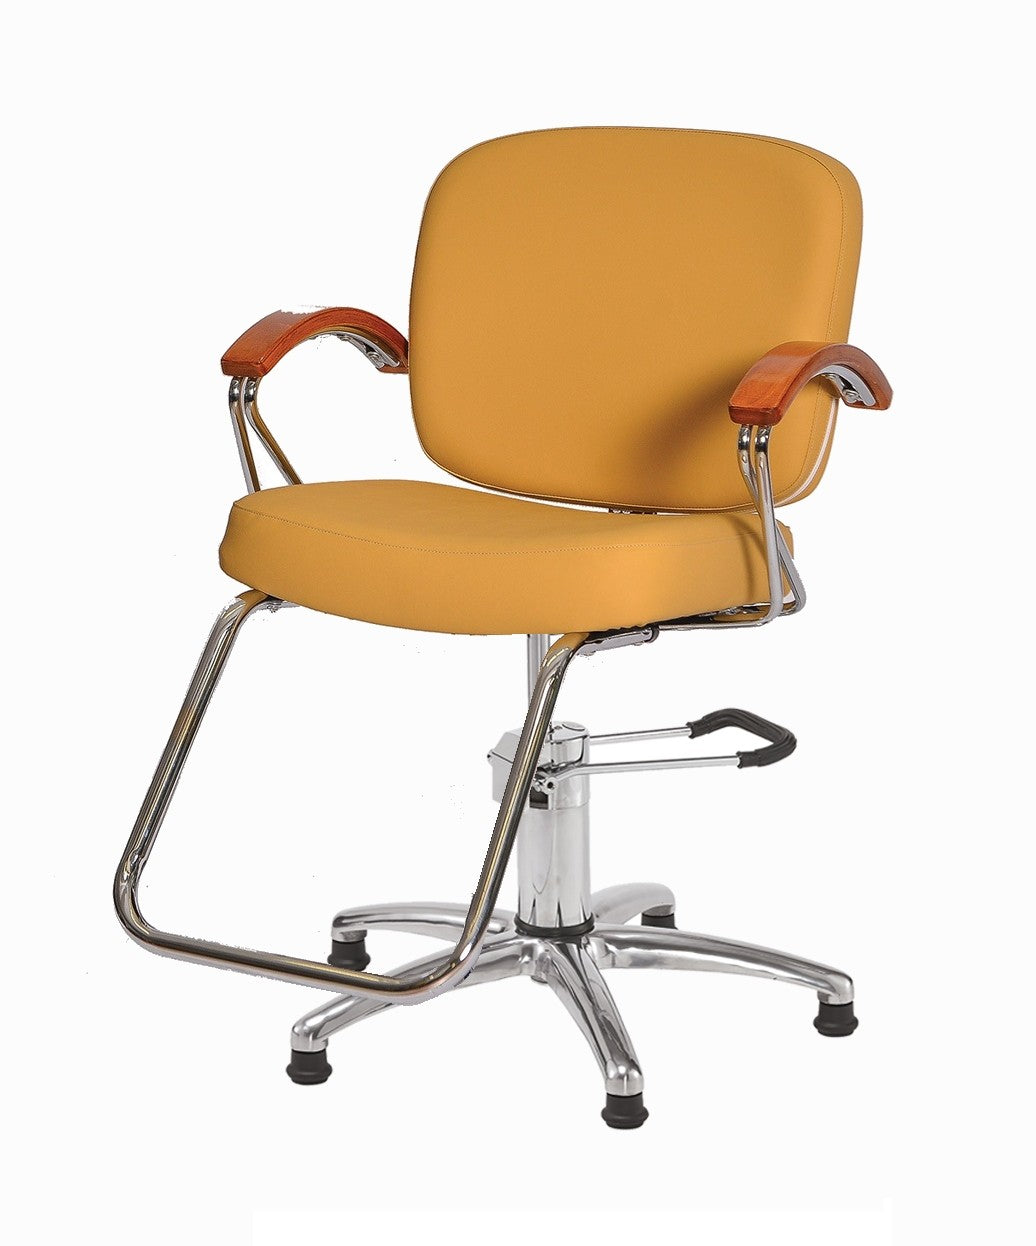 Pibbs 5906 Samantha Hydraulic Styling Chair